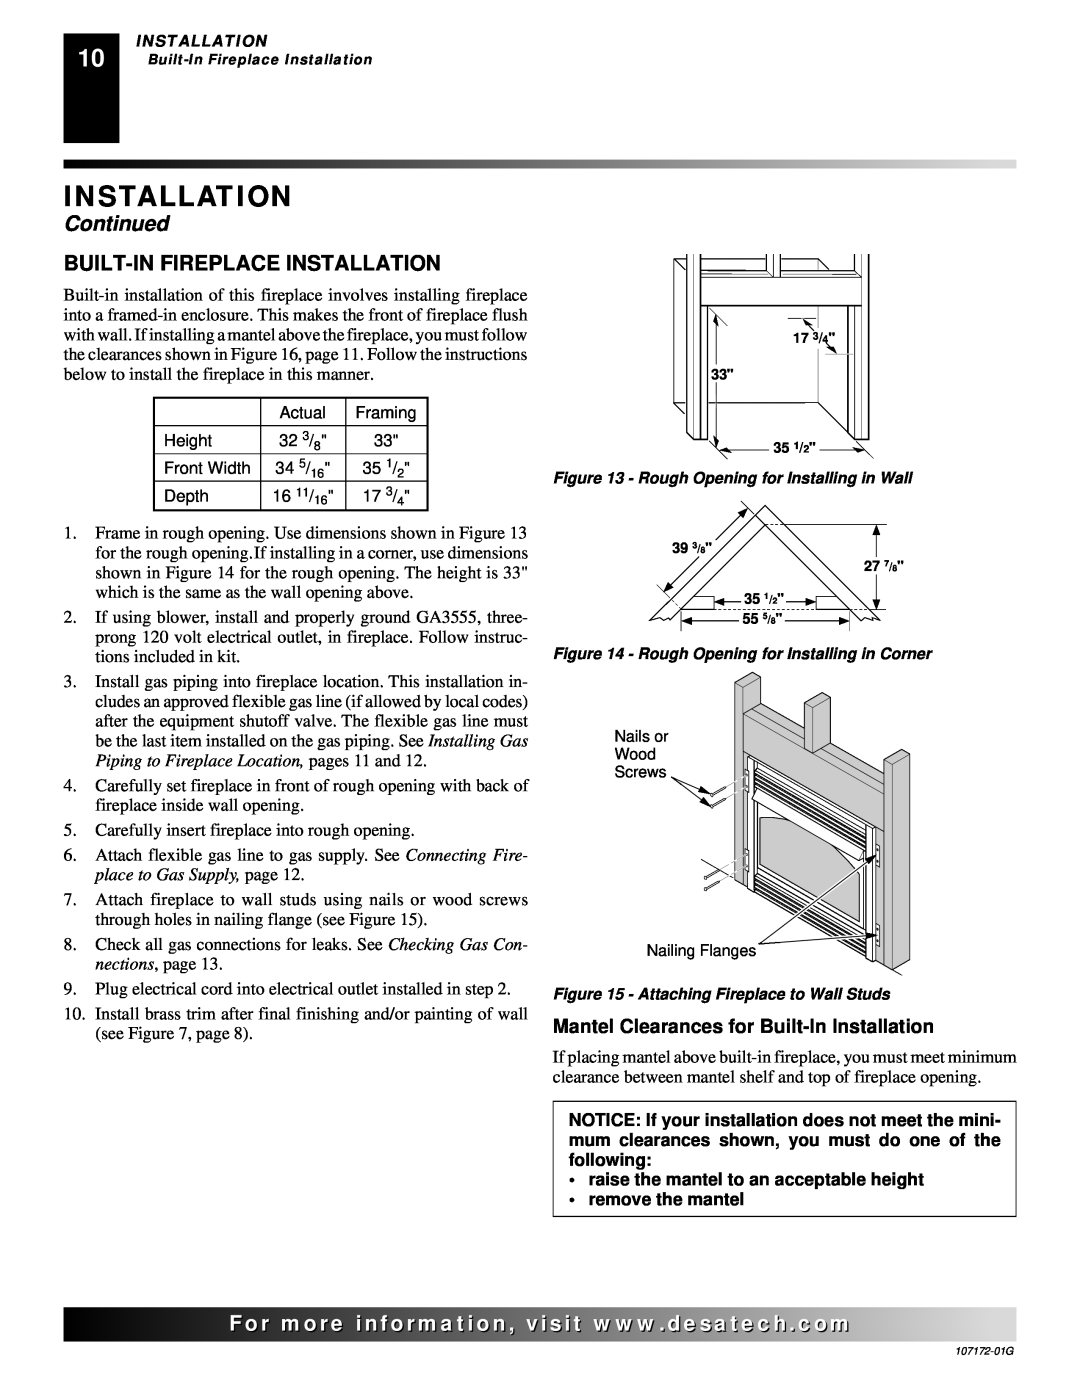 Desa VSGF33PRA installation manual Built-Infireplace Installation, Mantel Clearances for Built-InInstallation, Continued 